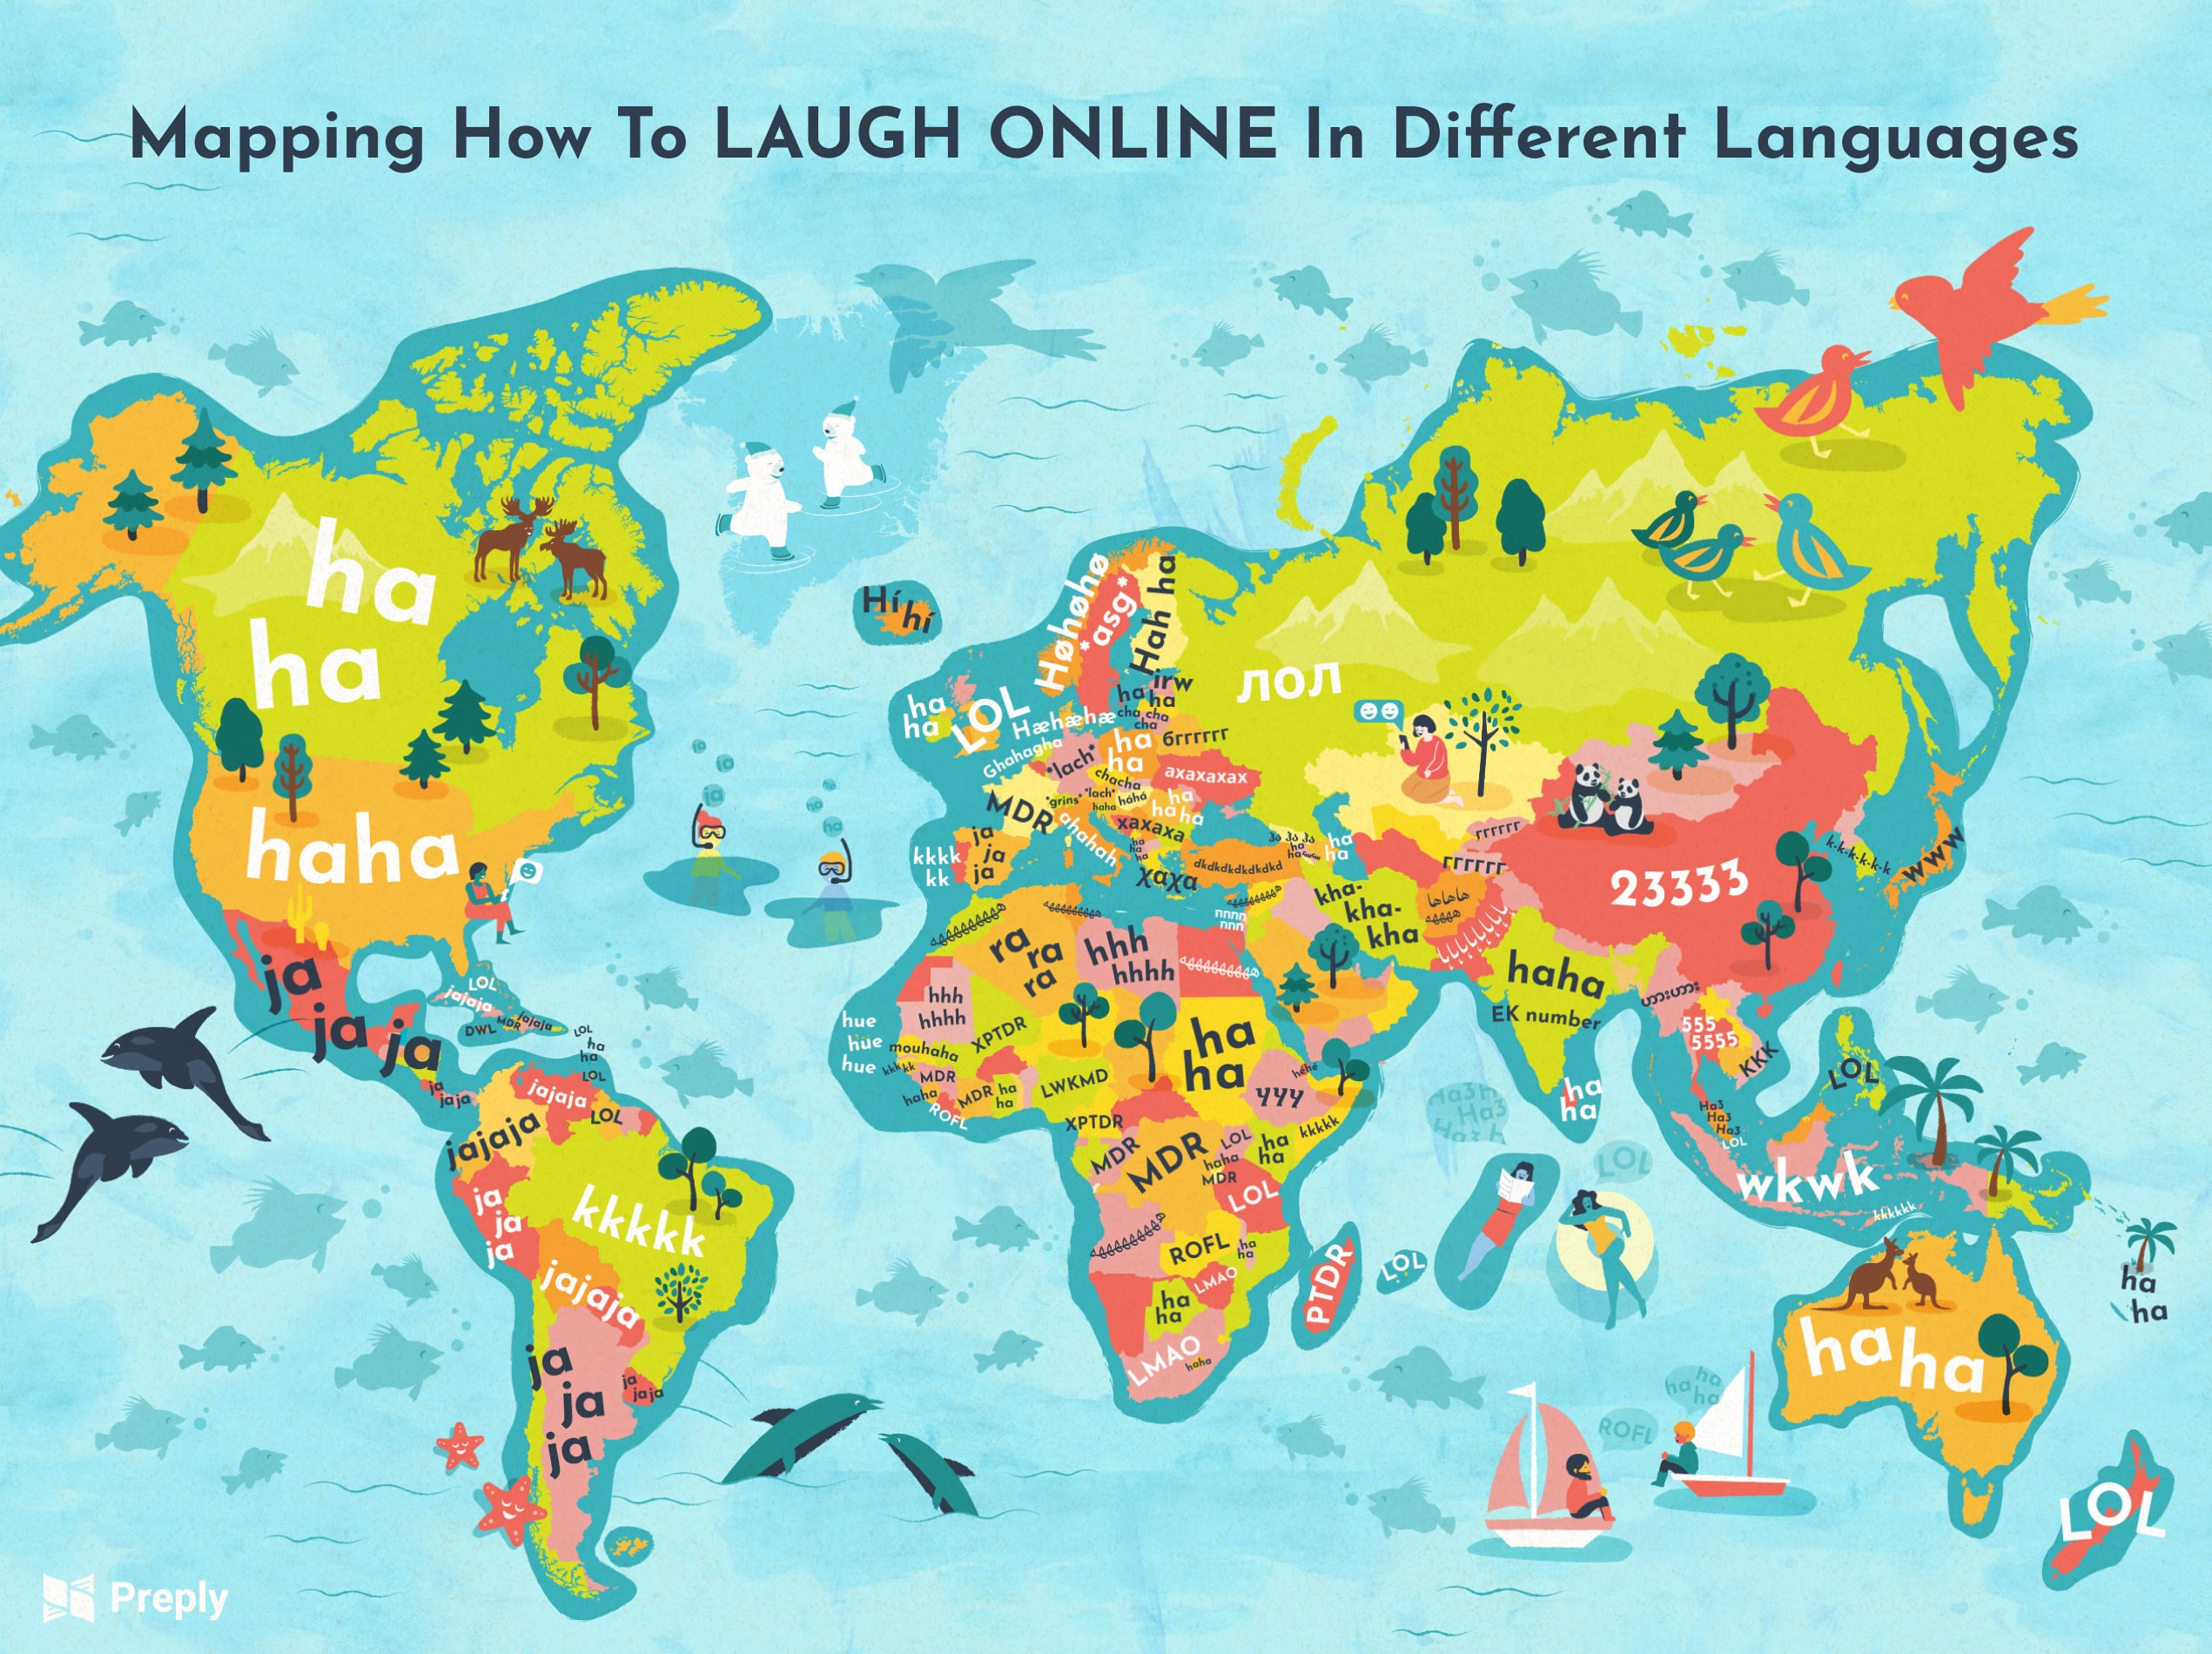 Lol, jaja, xaxa, and all the ways people laugh around the world